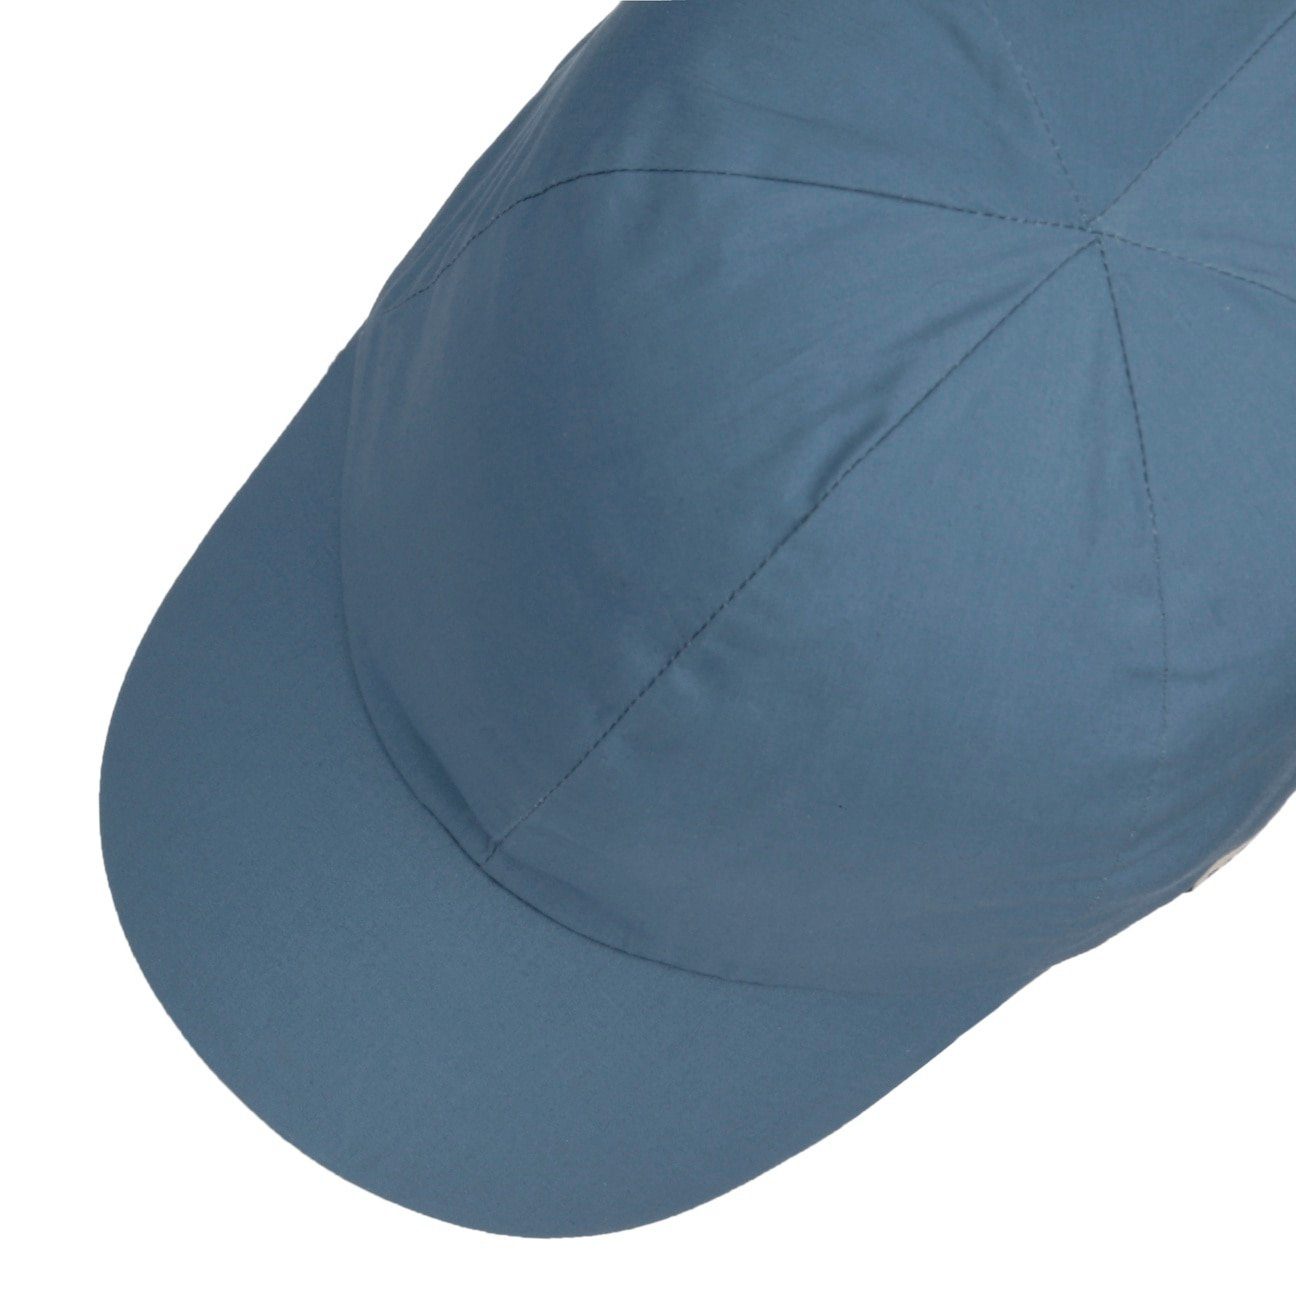 mit Baseball Cap Damencap Schirm blau (1-St) Barts